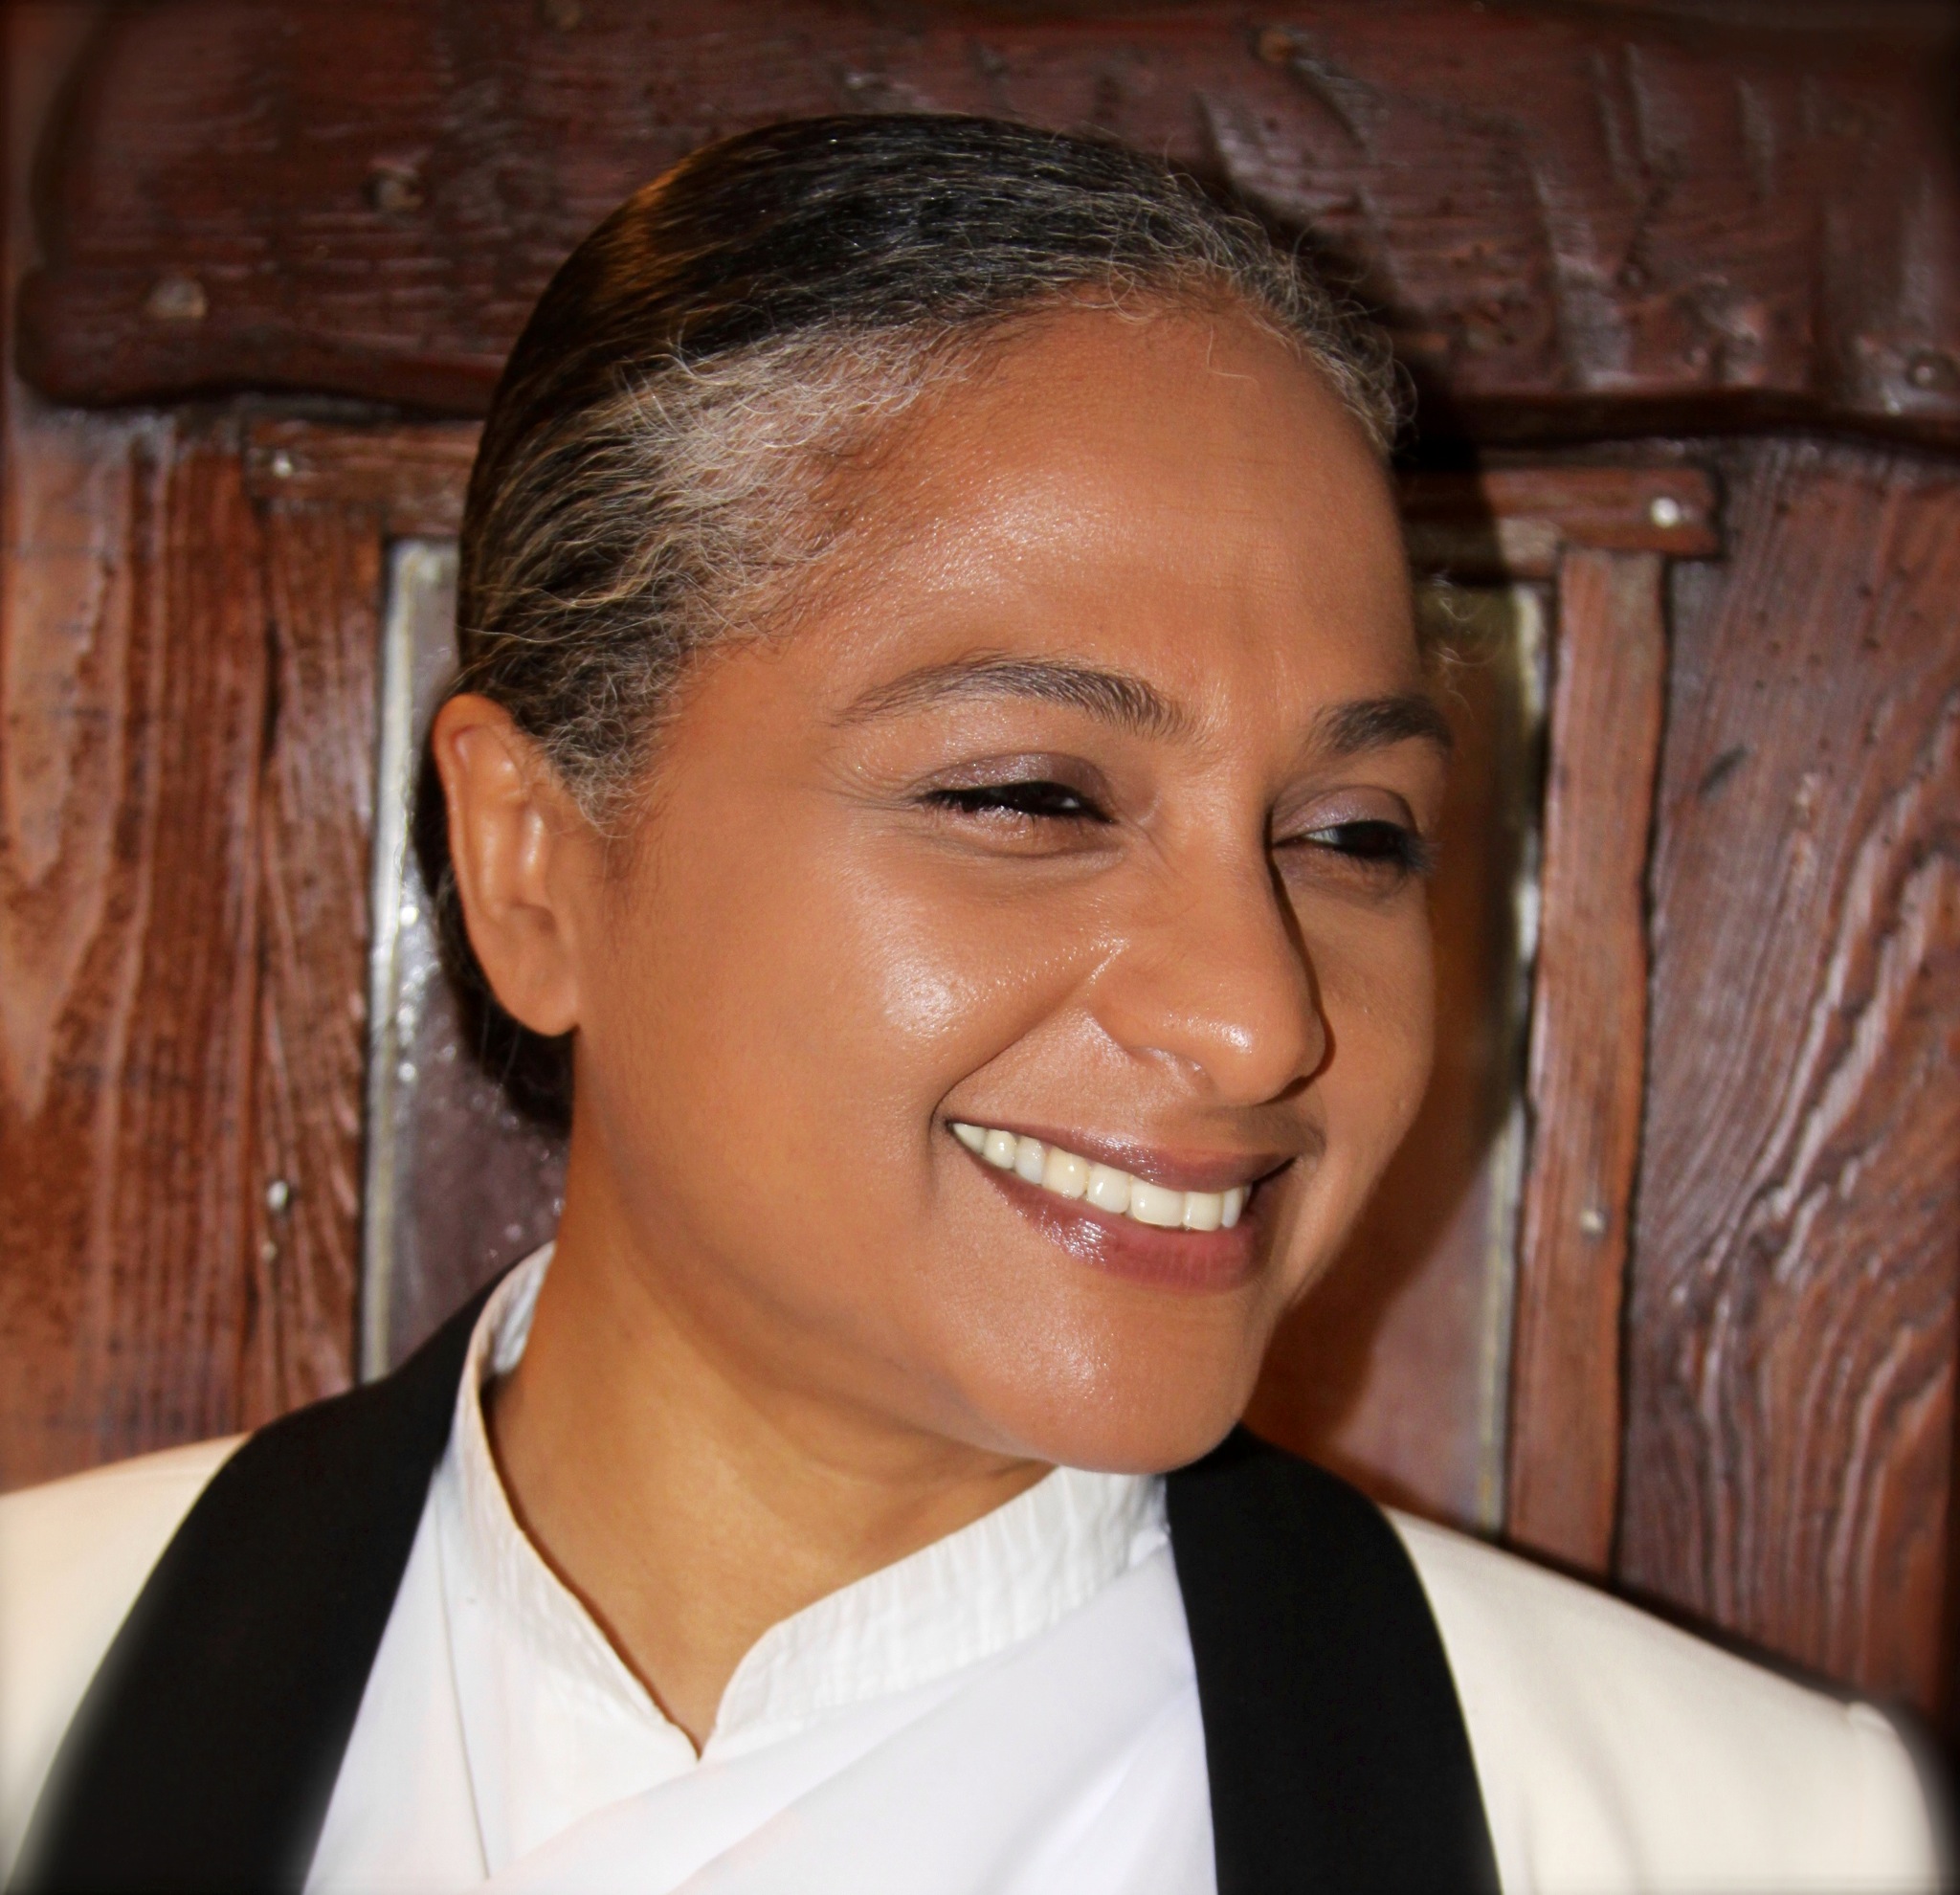 Meditation Expert and Award Winning Spiritual Leader Sister Jenna